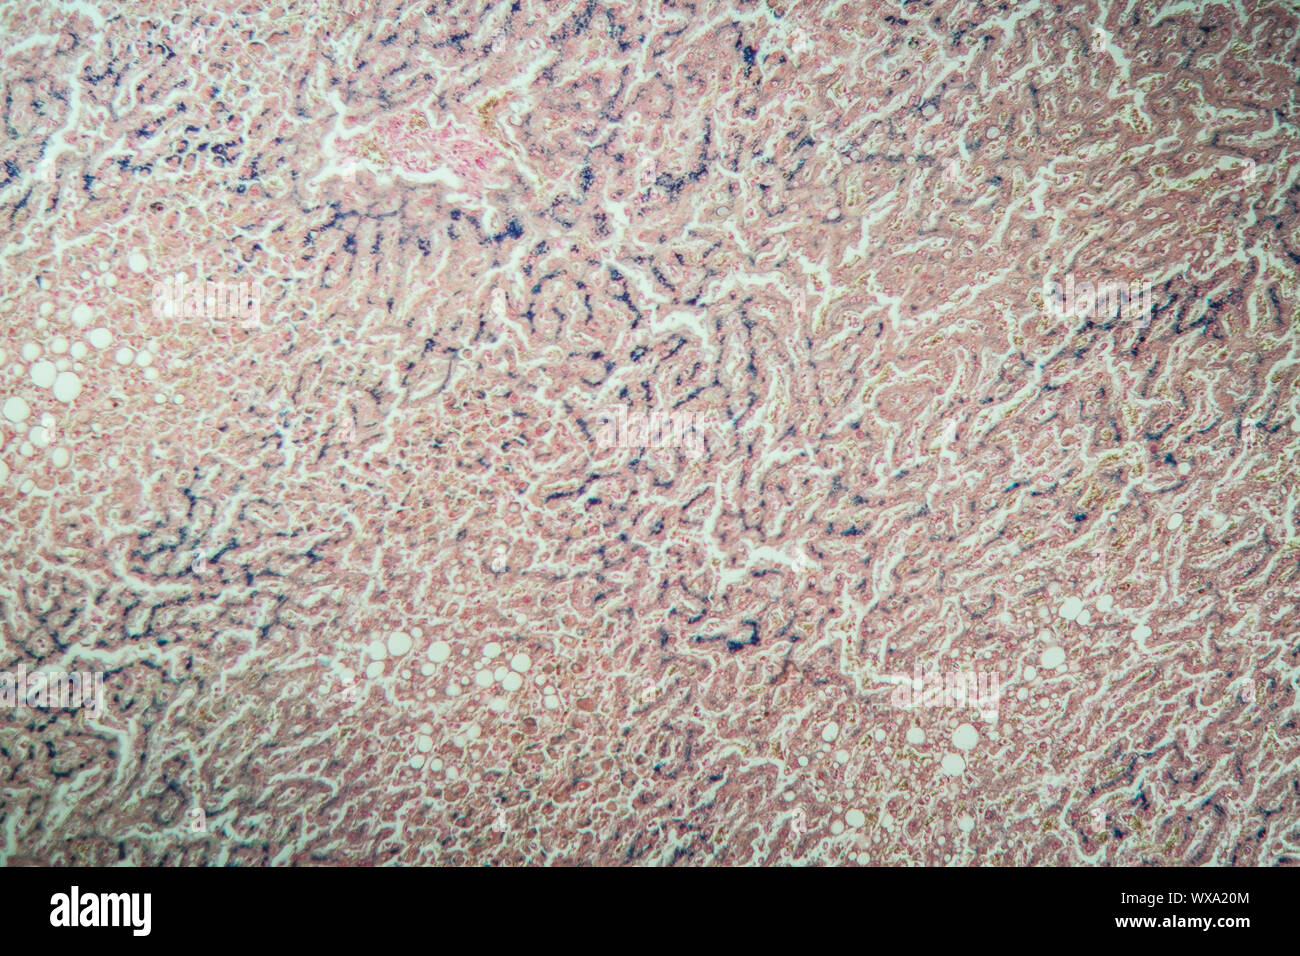 Hemosiderosis liver under the microscope 100x Stock Photo